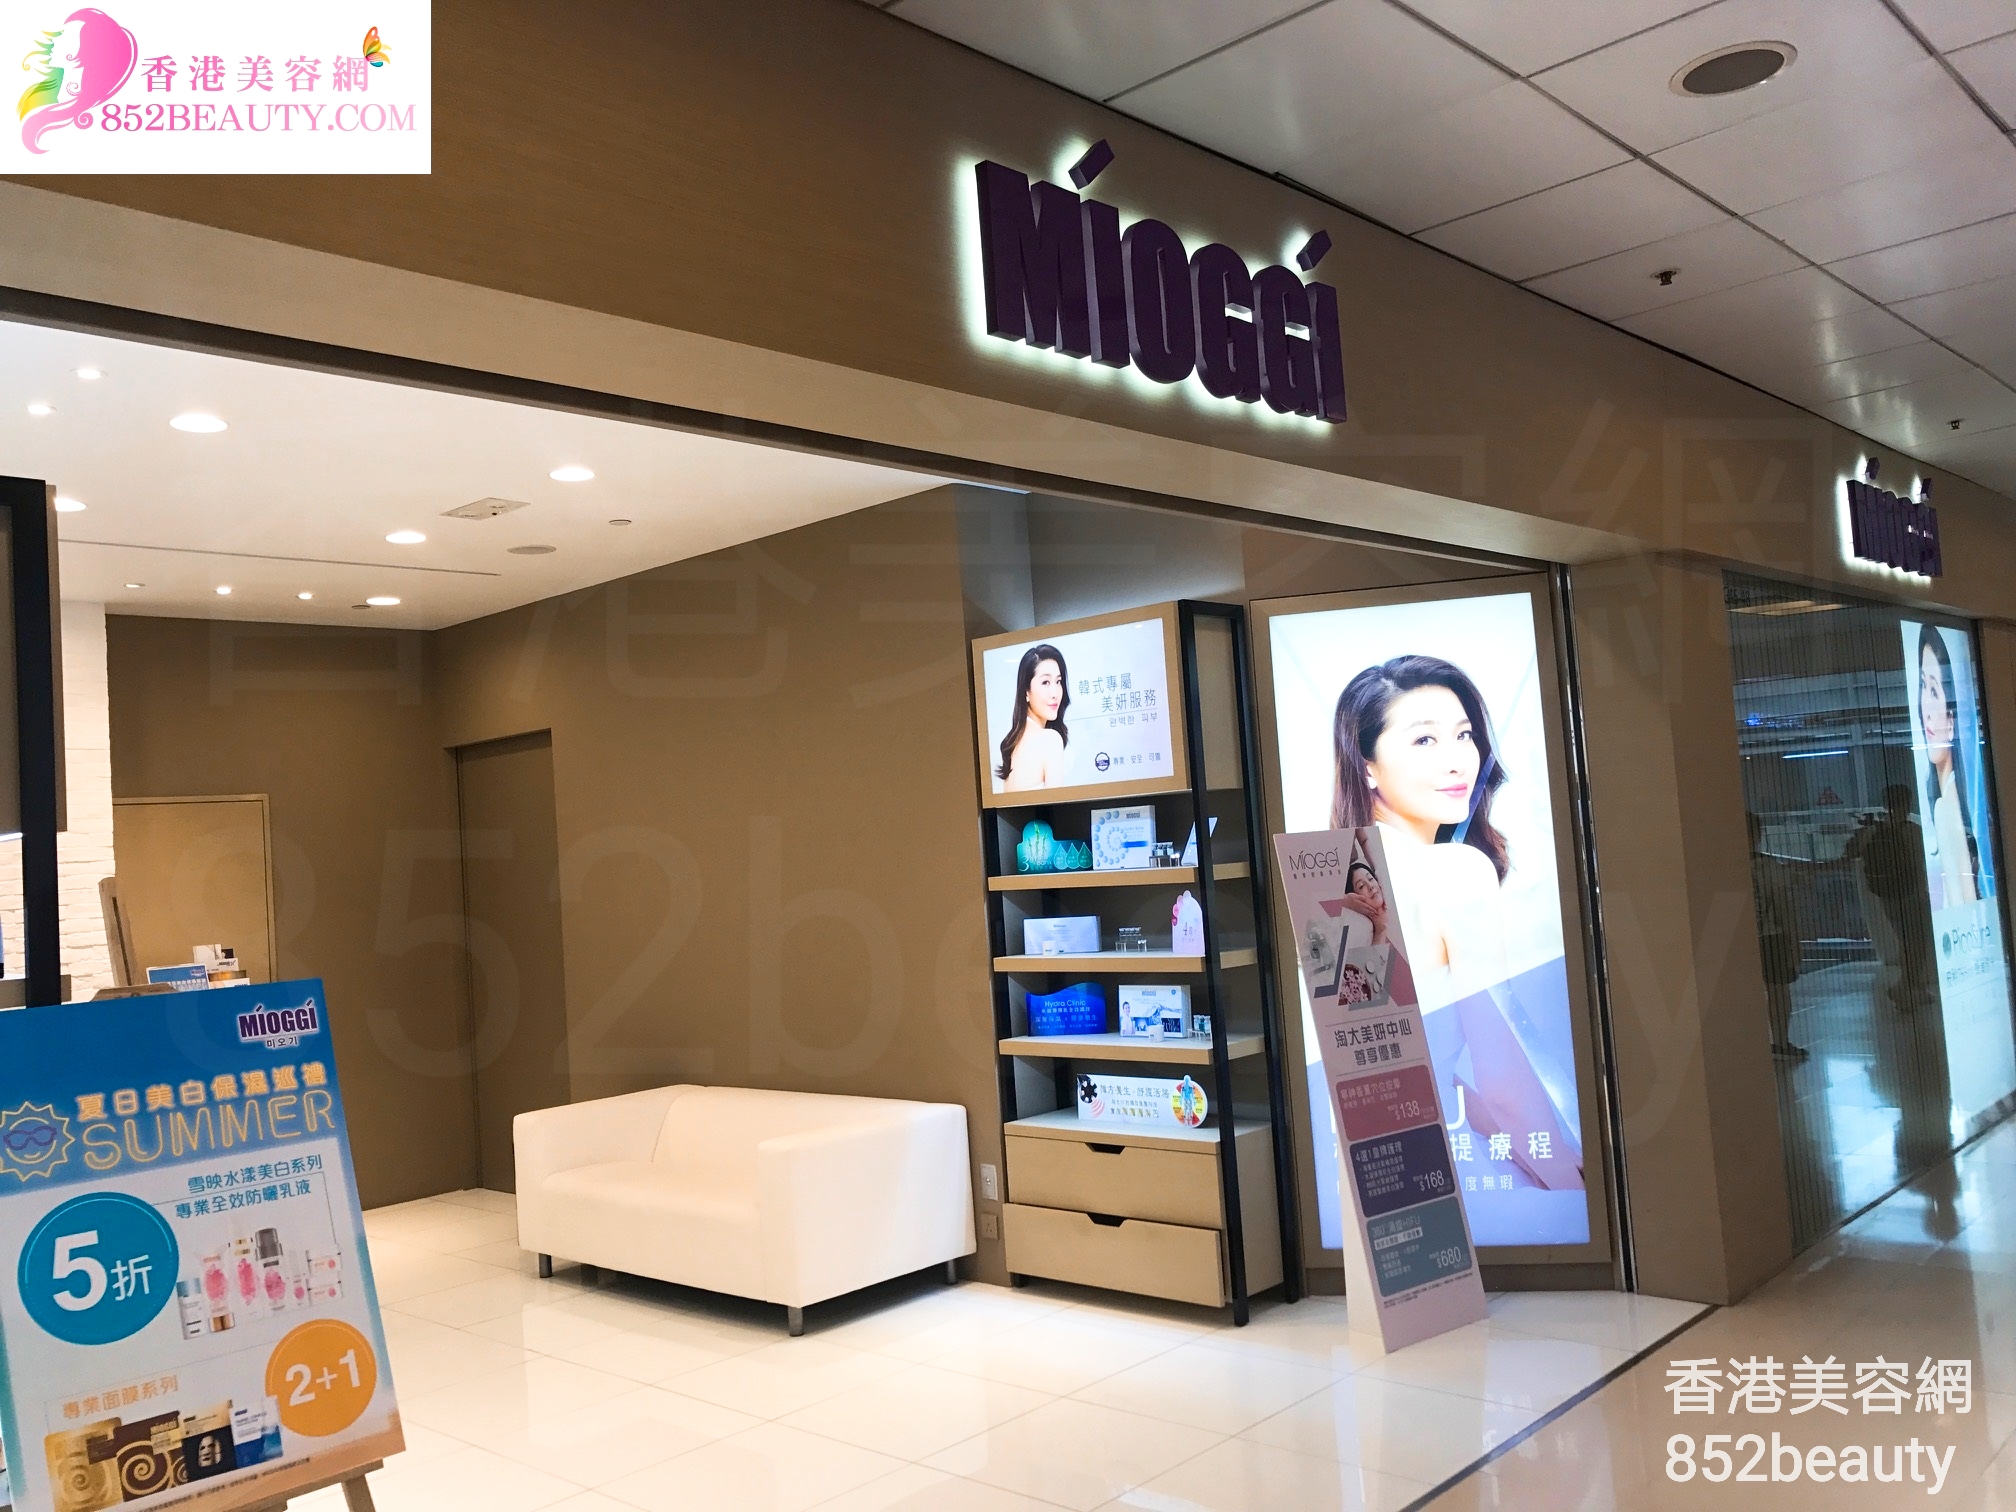 美容院 Beauty Salon 集团MIOGGI Beauty (We Go Mall) @ 香港美容网 HK Beauty Salon